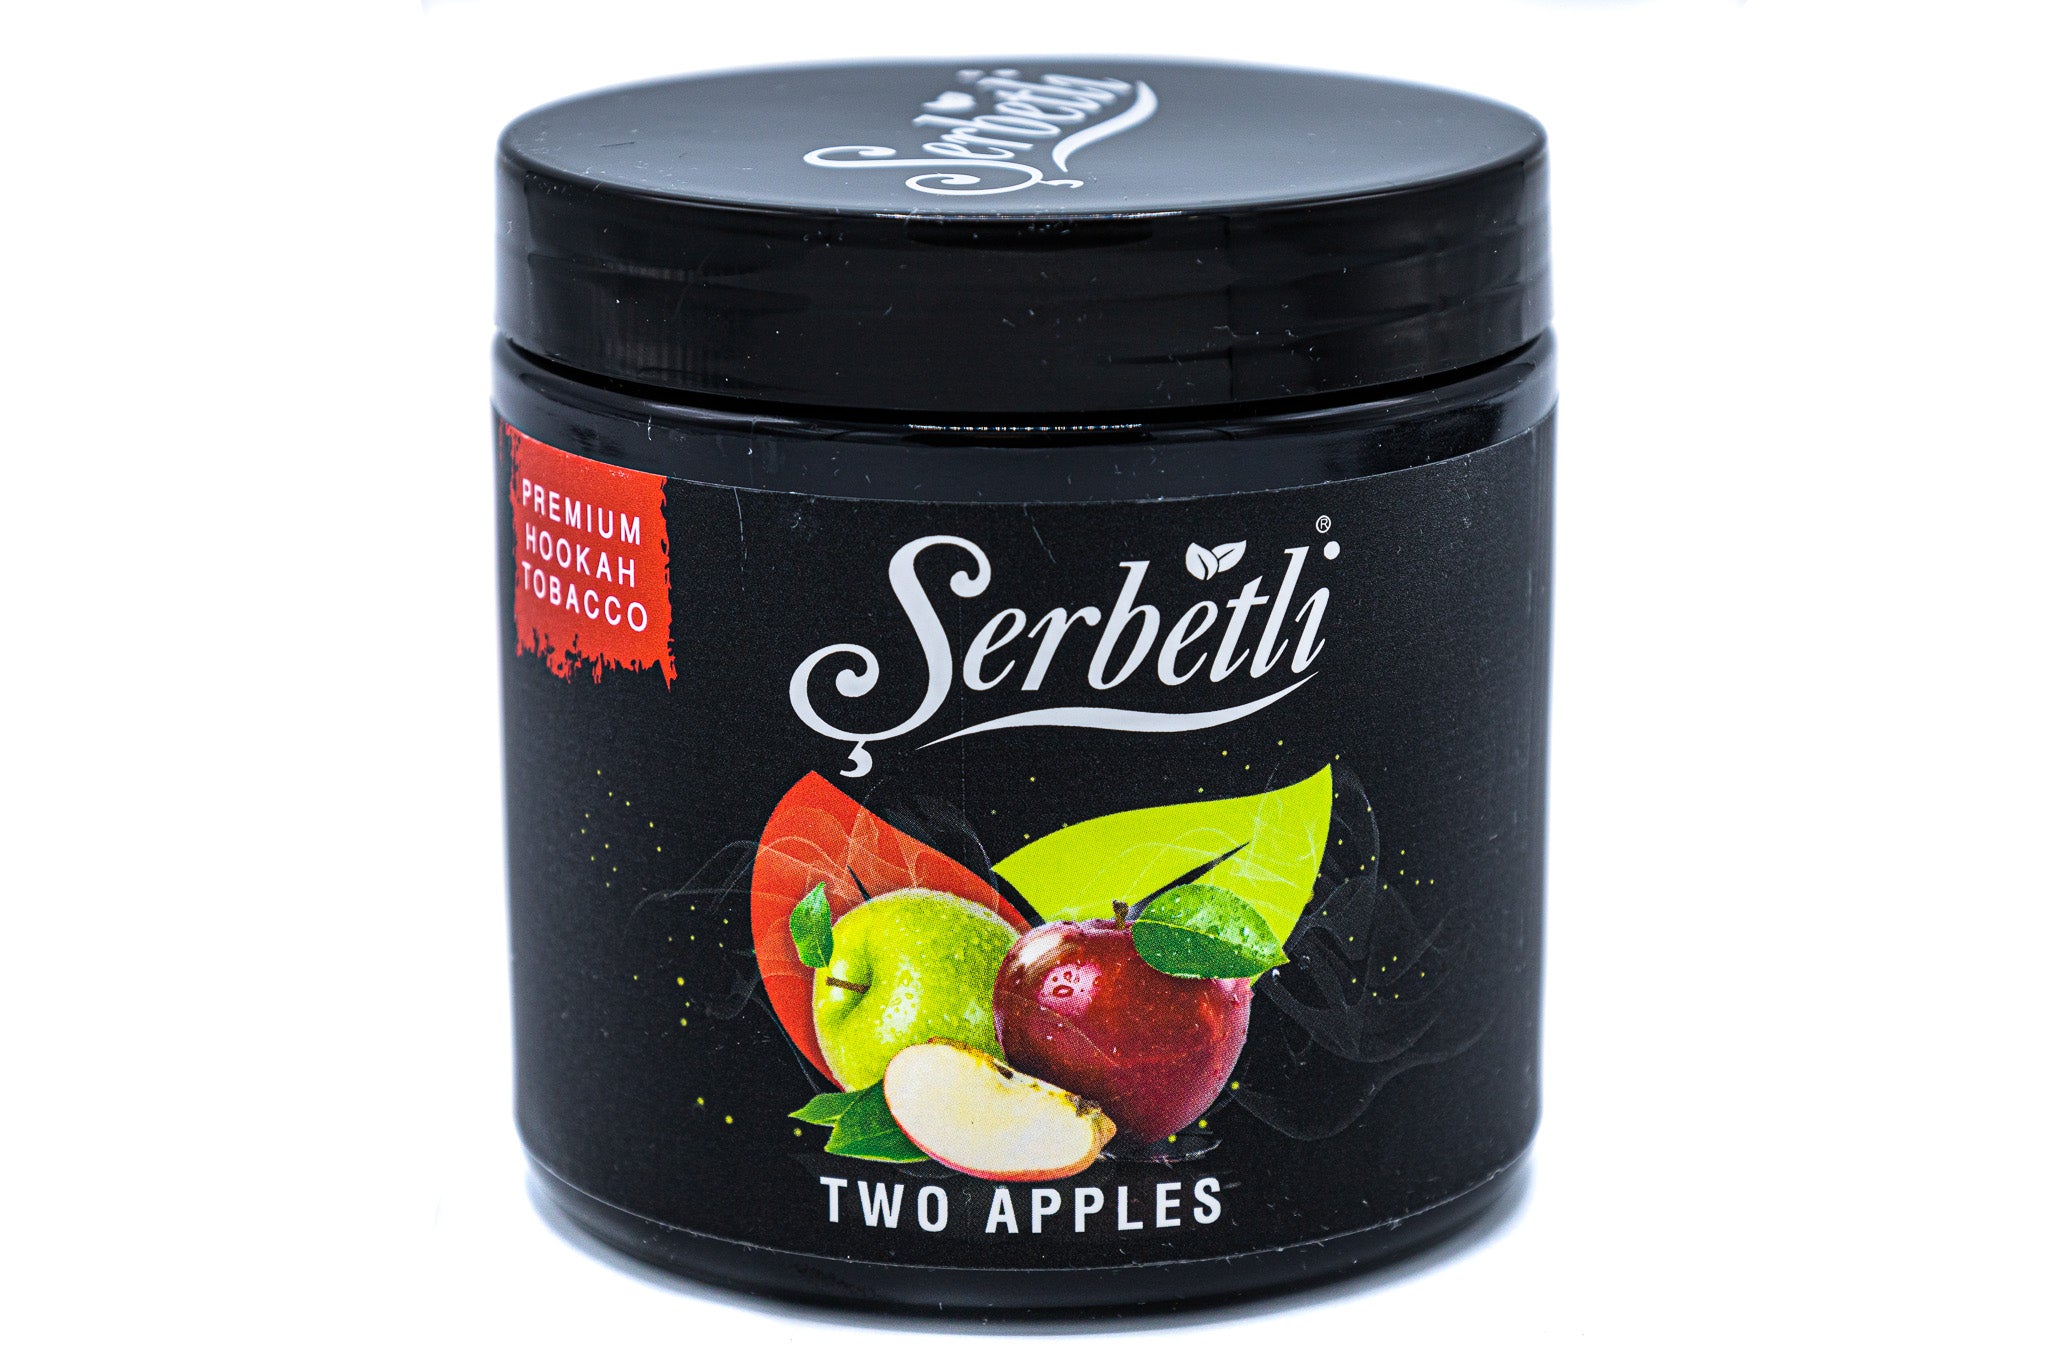 Serbetli Two Apples 250G - Smoxygen